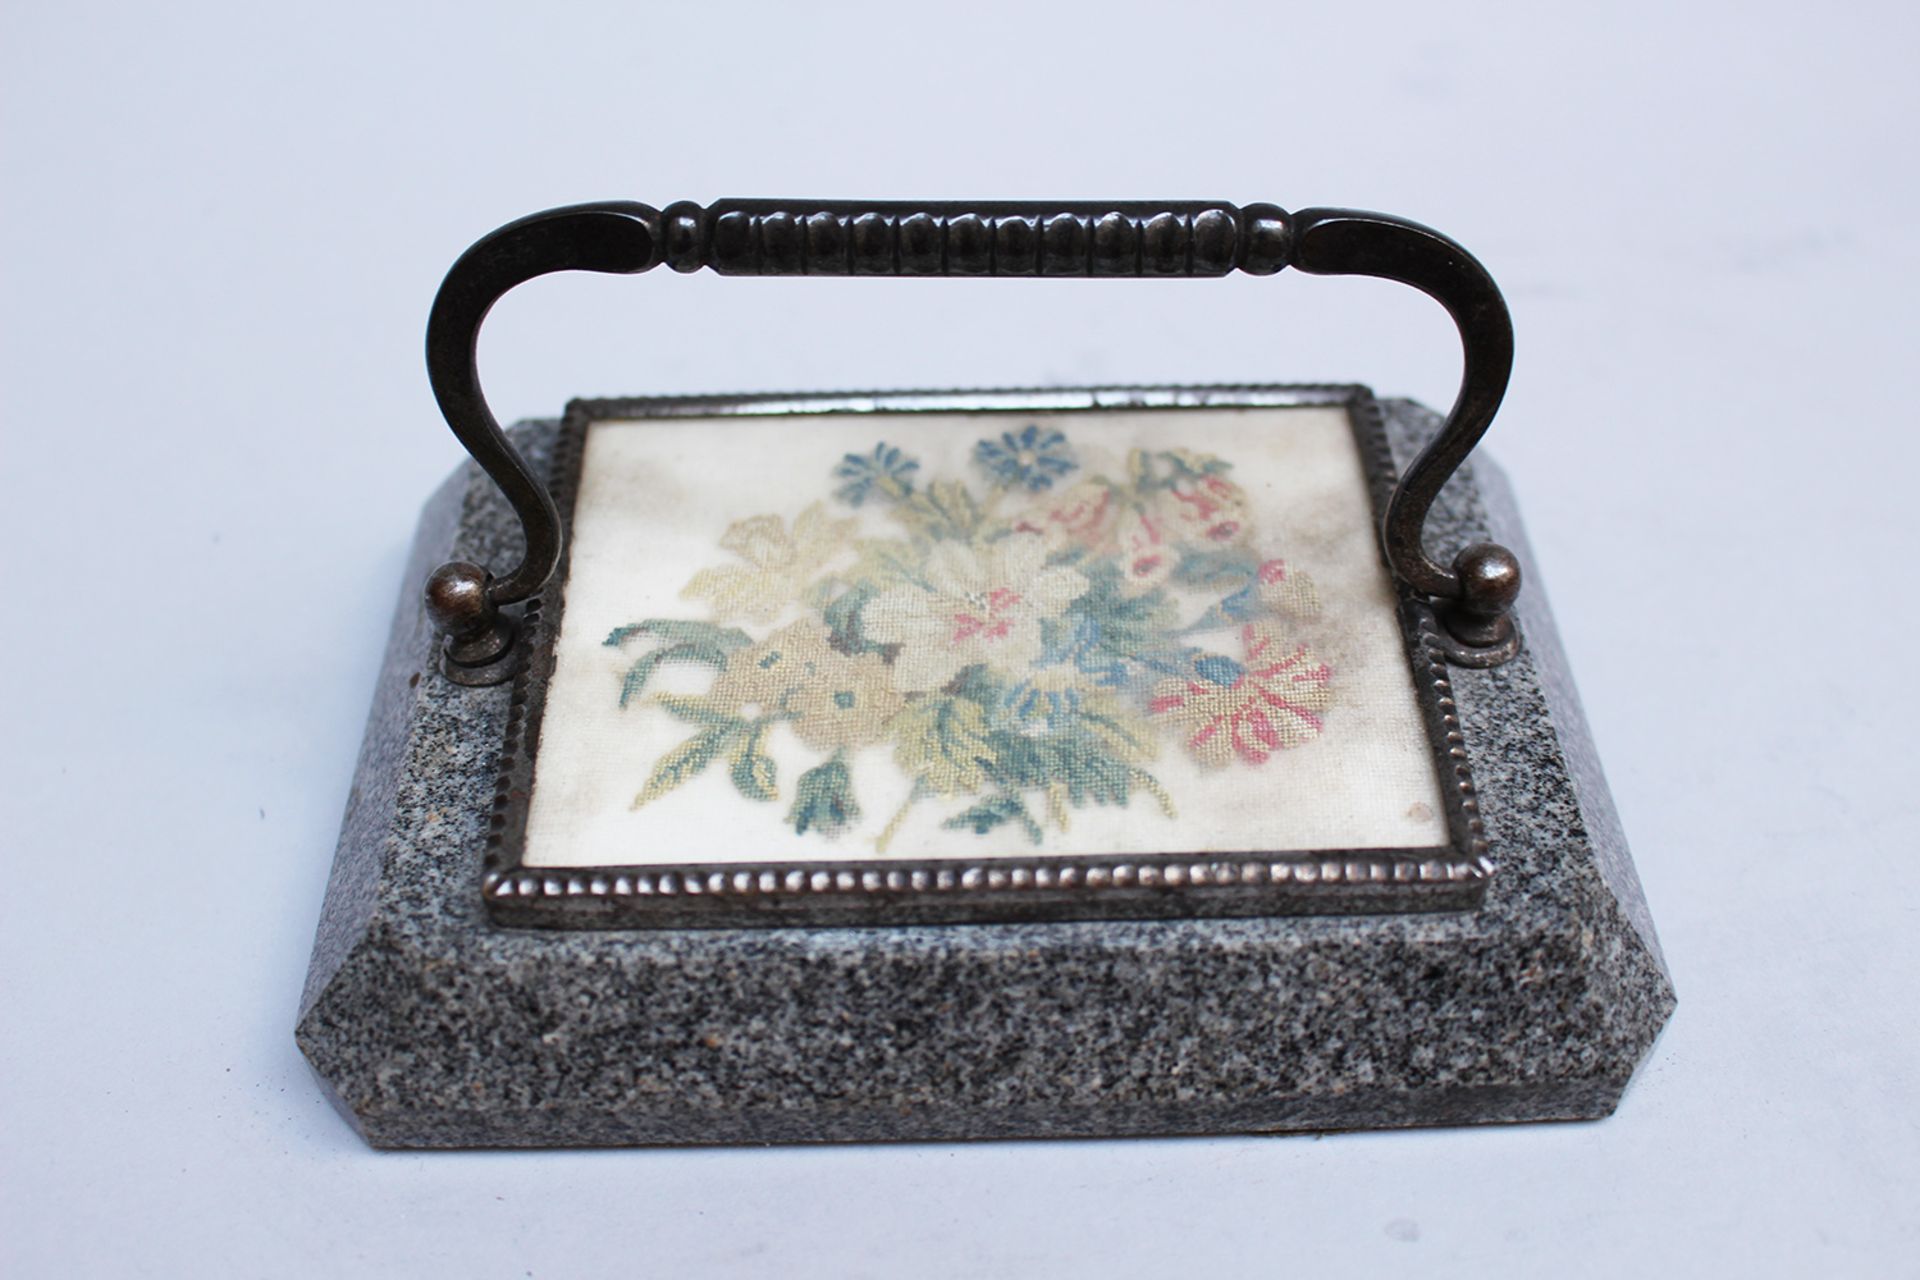 Vienna paperweight, cut iron mount with needlework picture on grey granite stone base; around